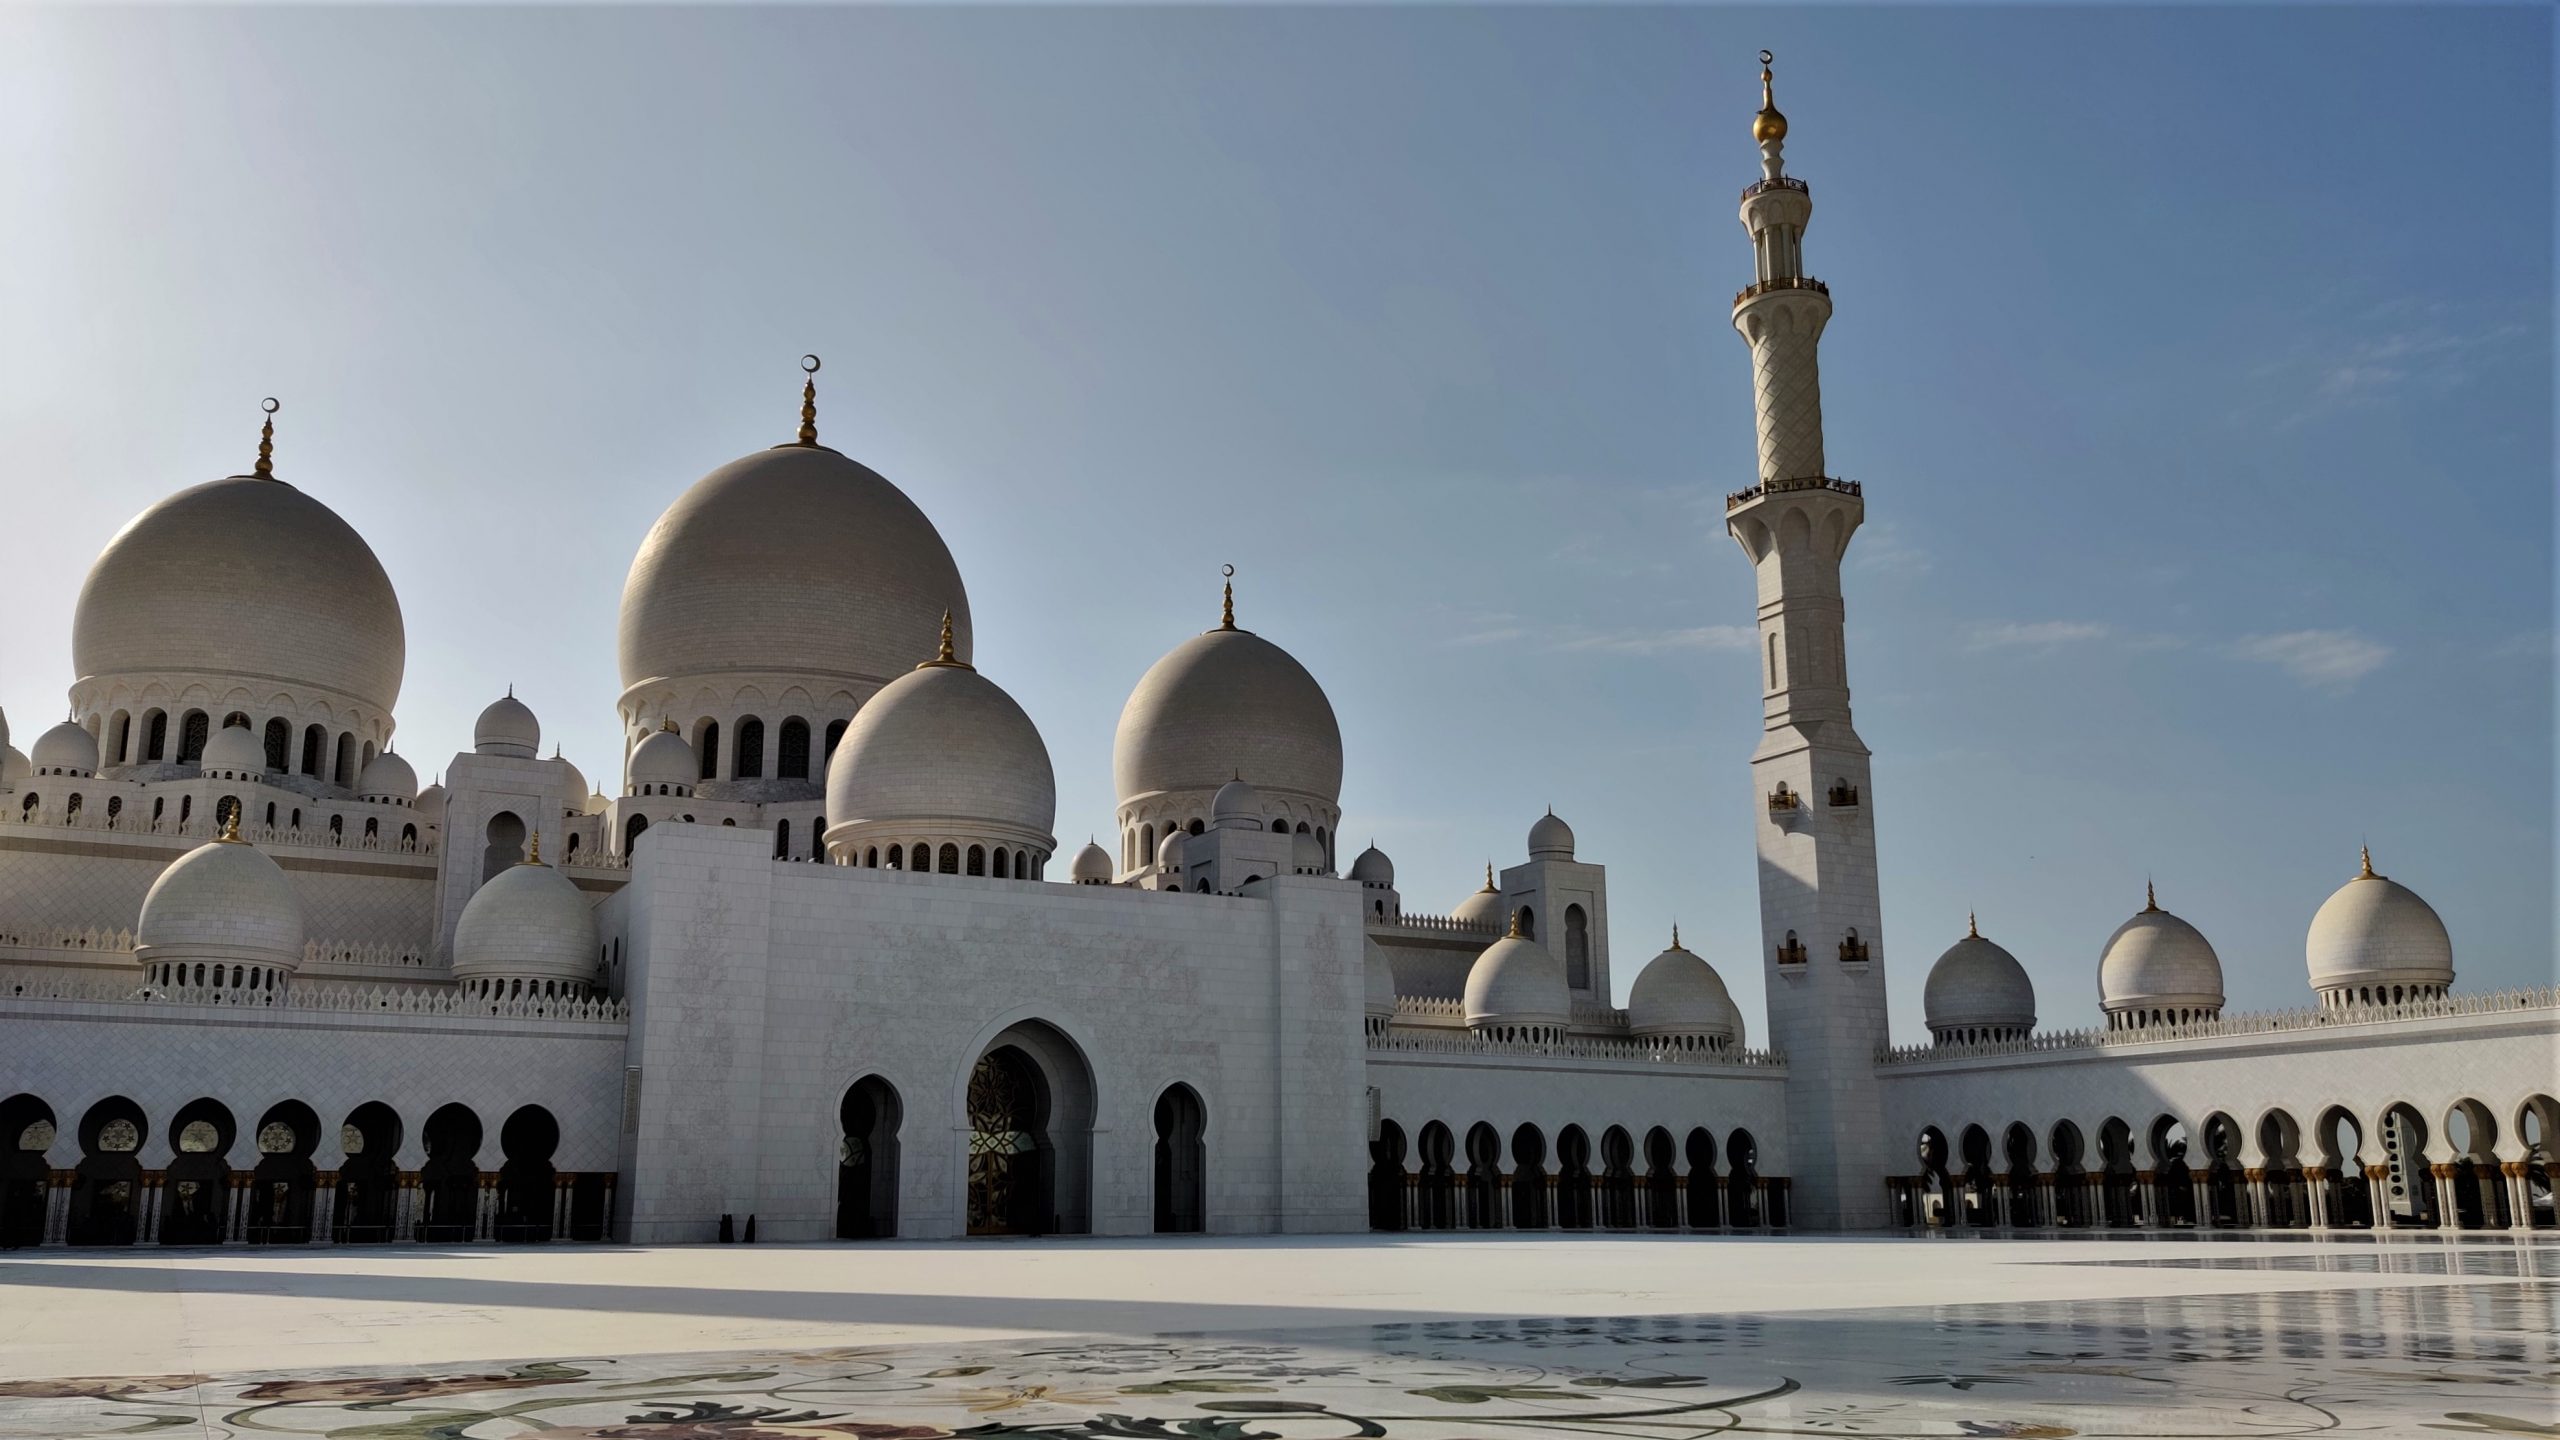 Muslim Packages syeikh zayed grand mosque abu dhabi uae scaled